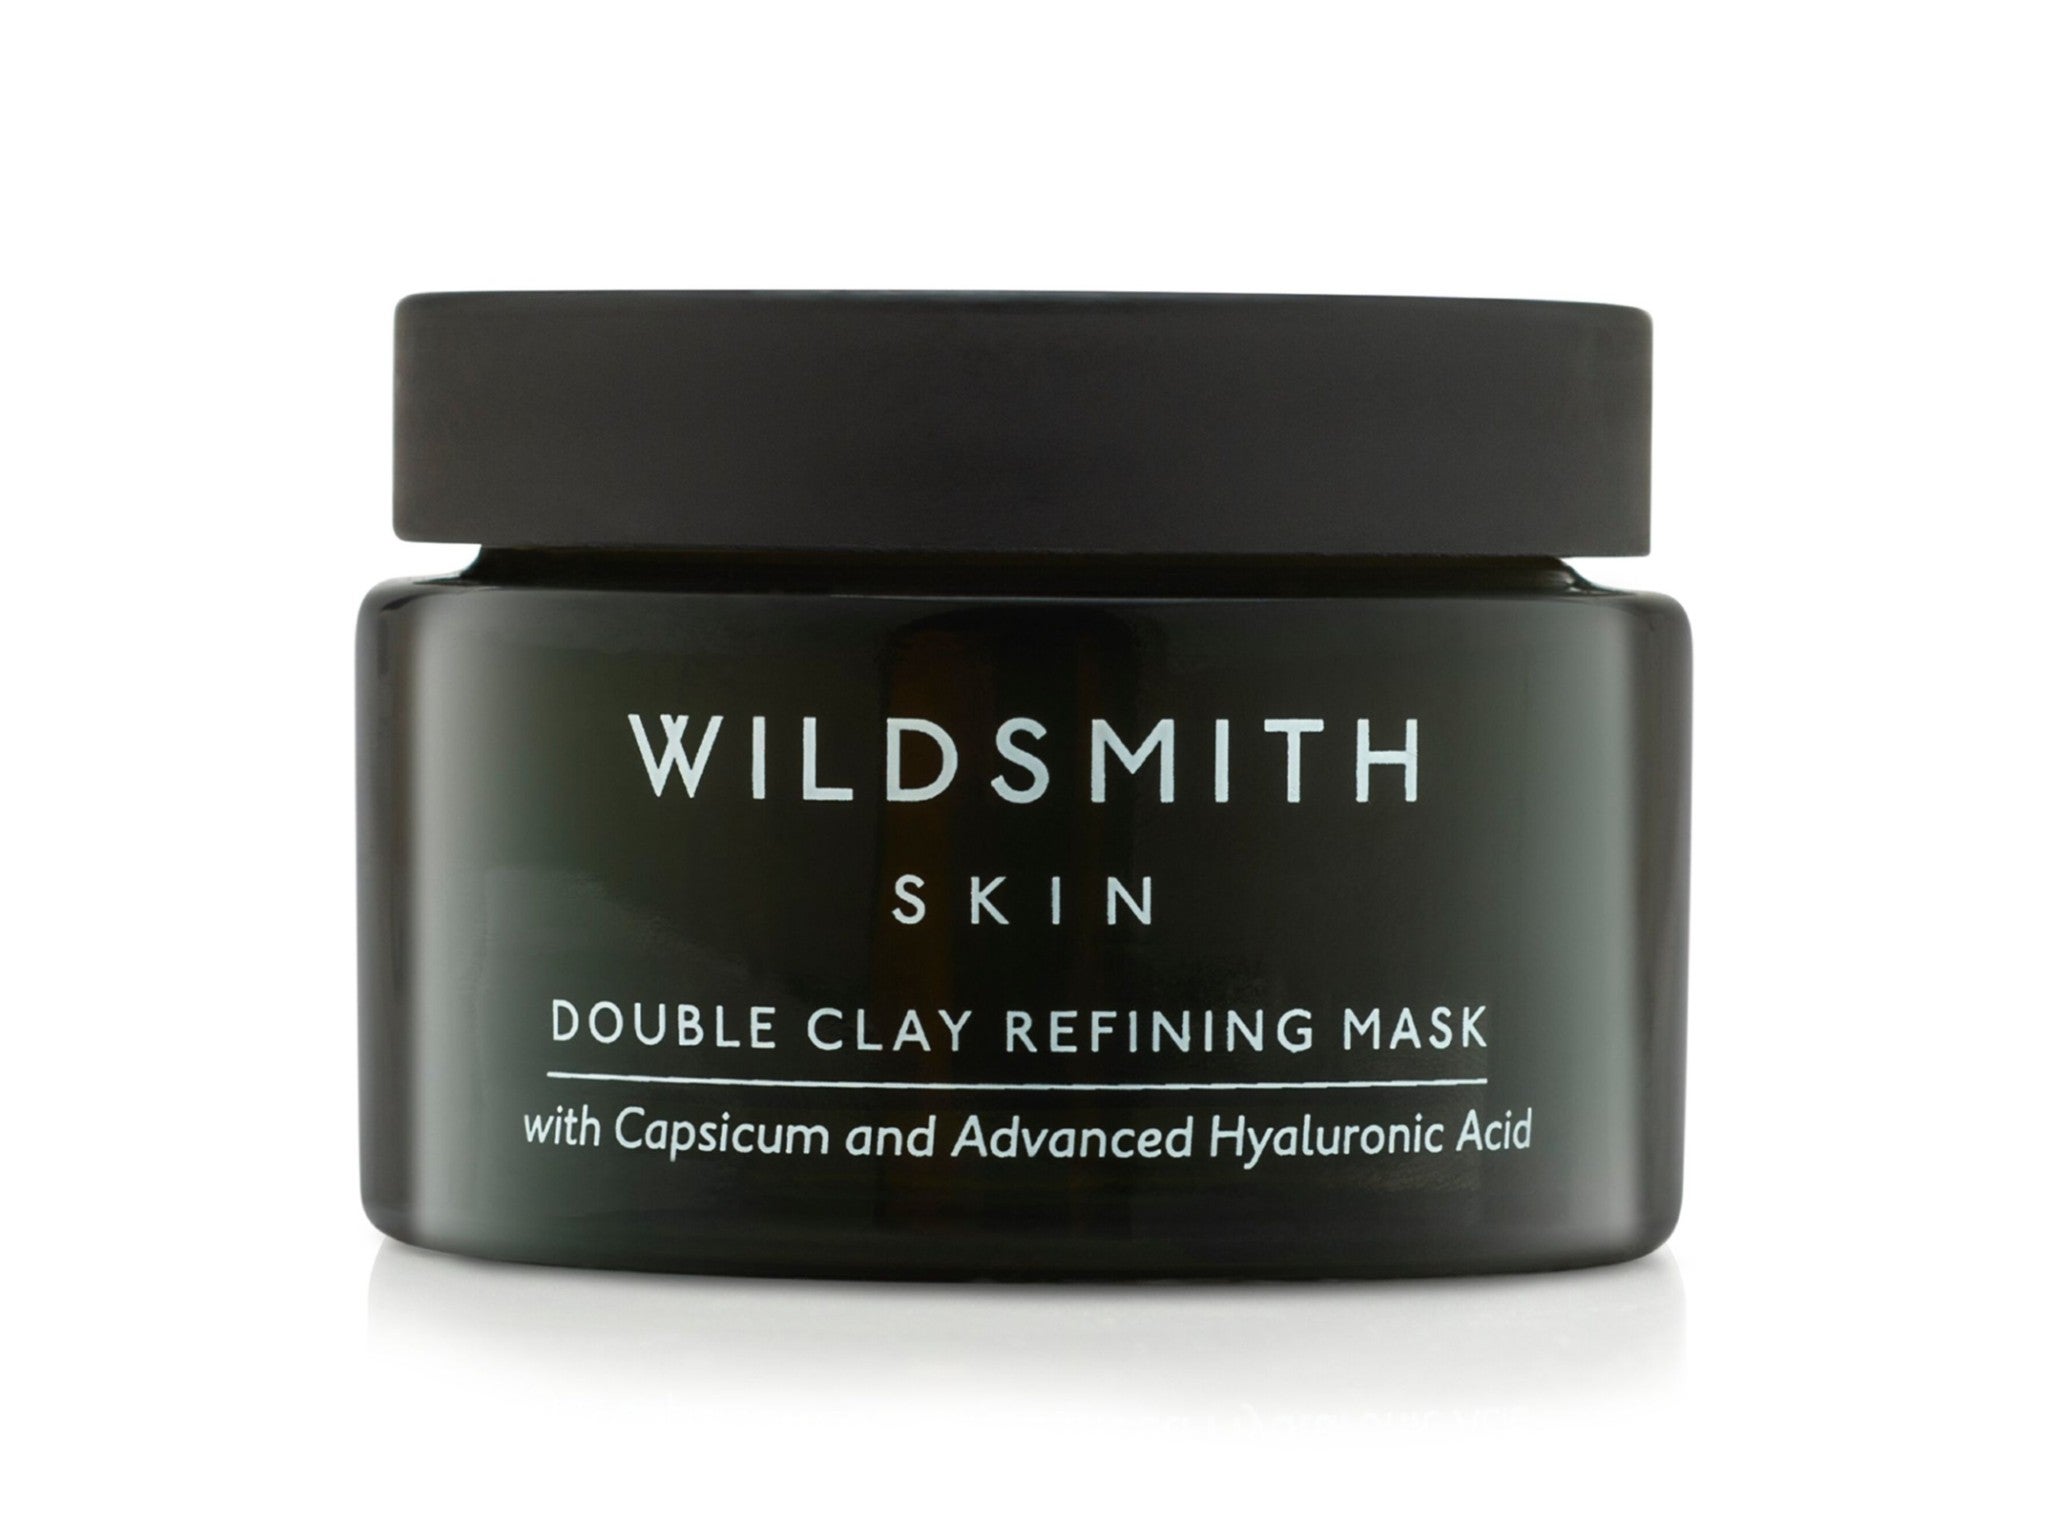 Wildsmith Skin double clay refining mask indybest.jpeg